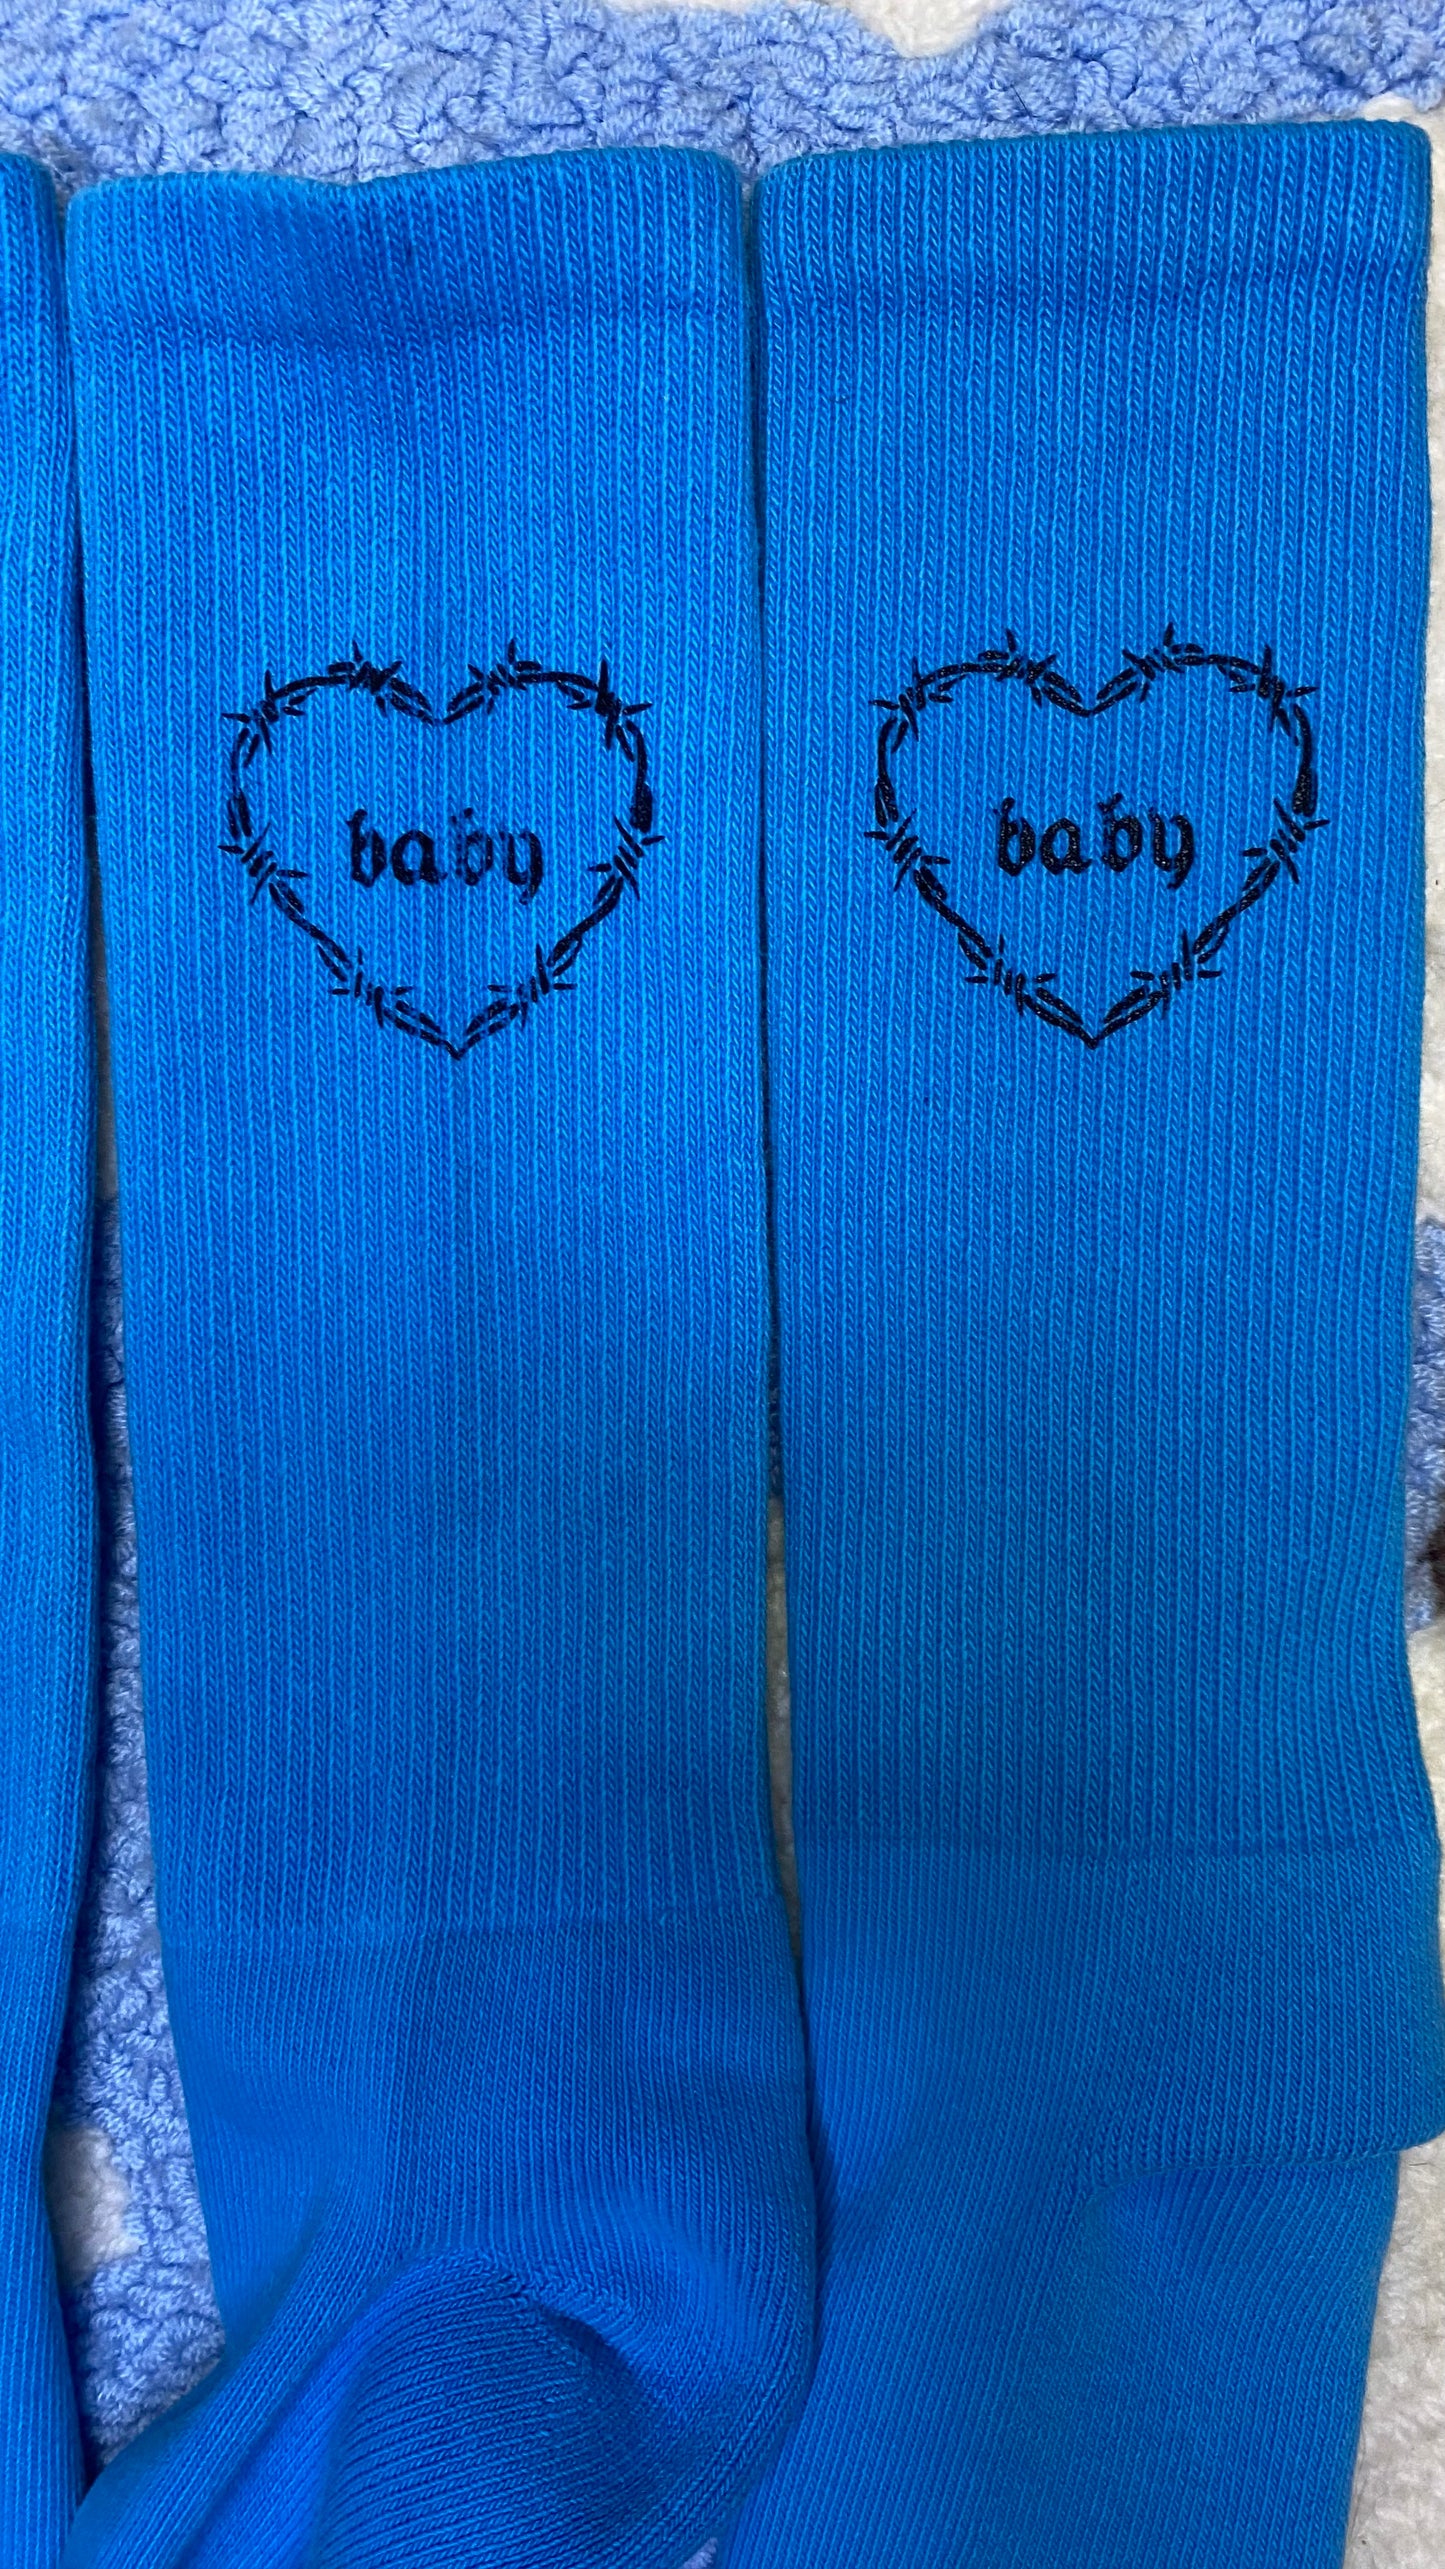 baby (socks)